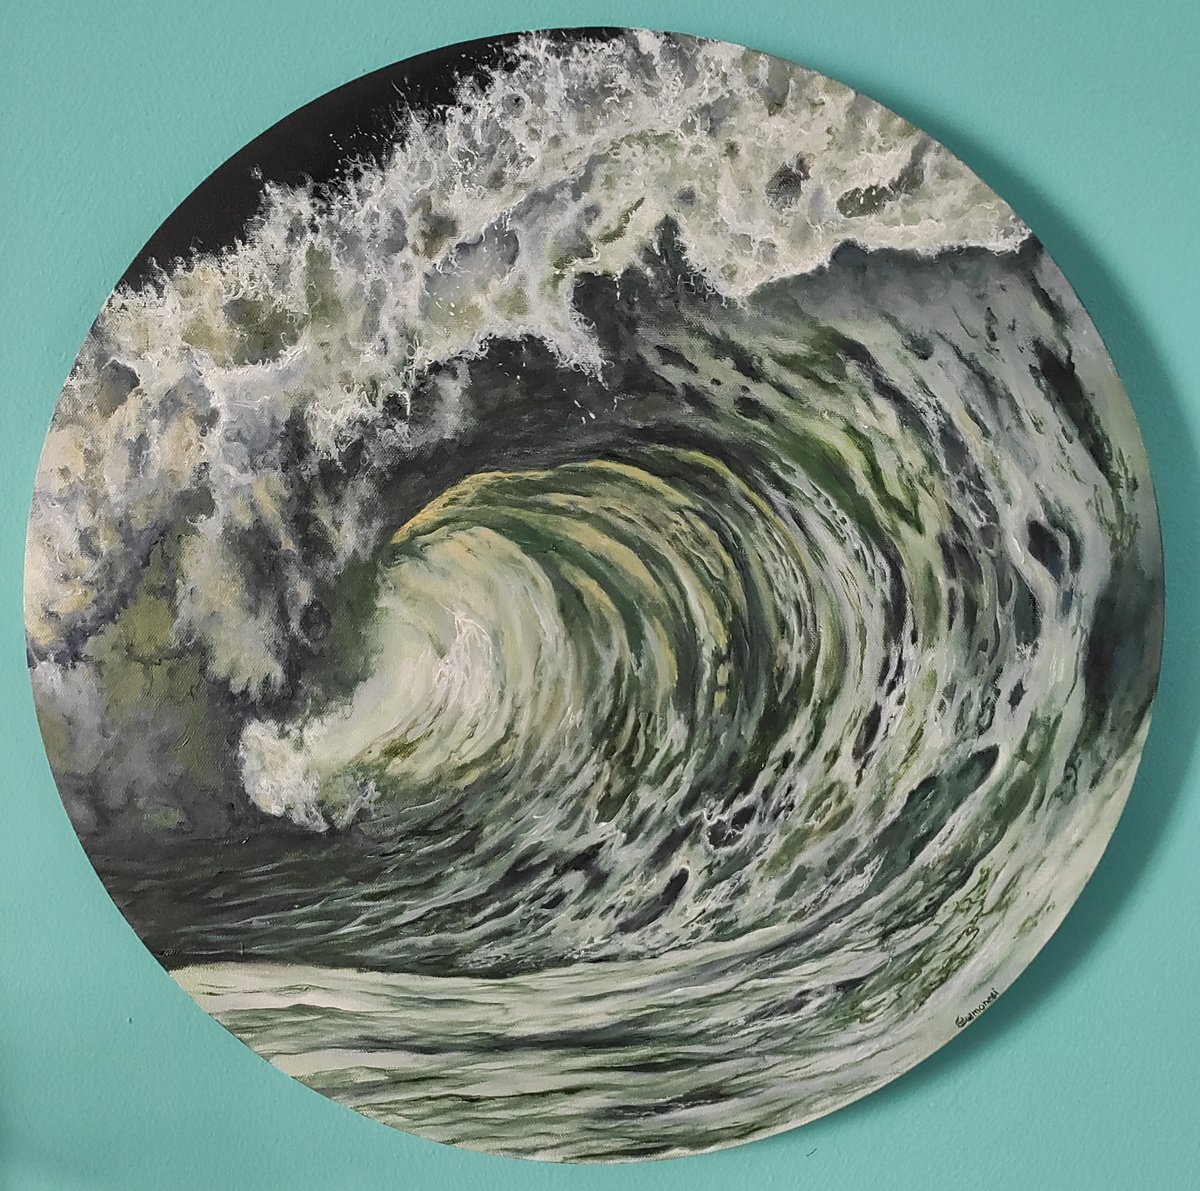 L’abbraccio vitale dell’onda - wave painting by Gianluca Cremonesi